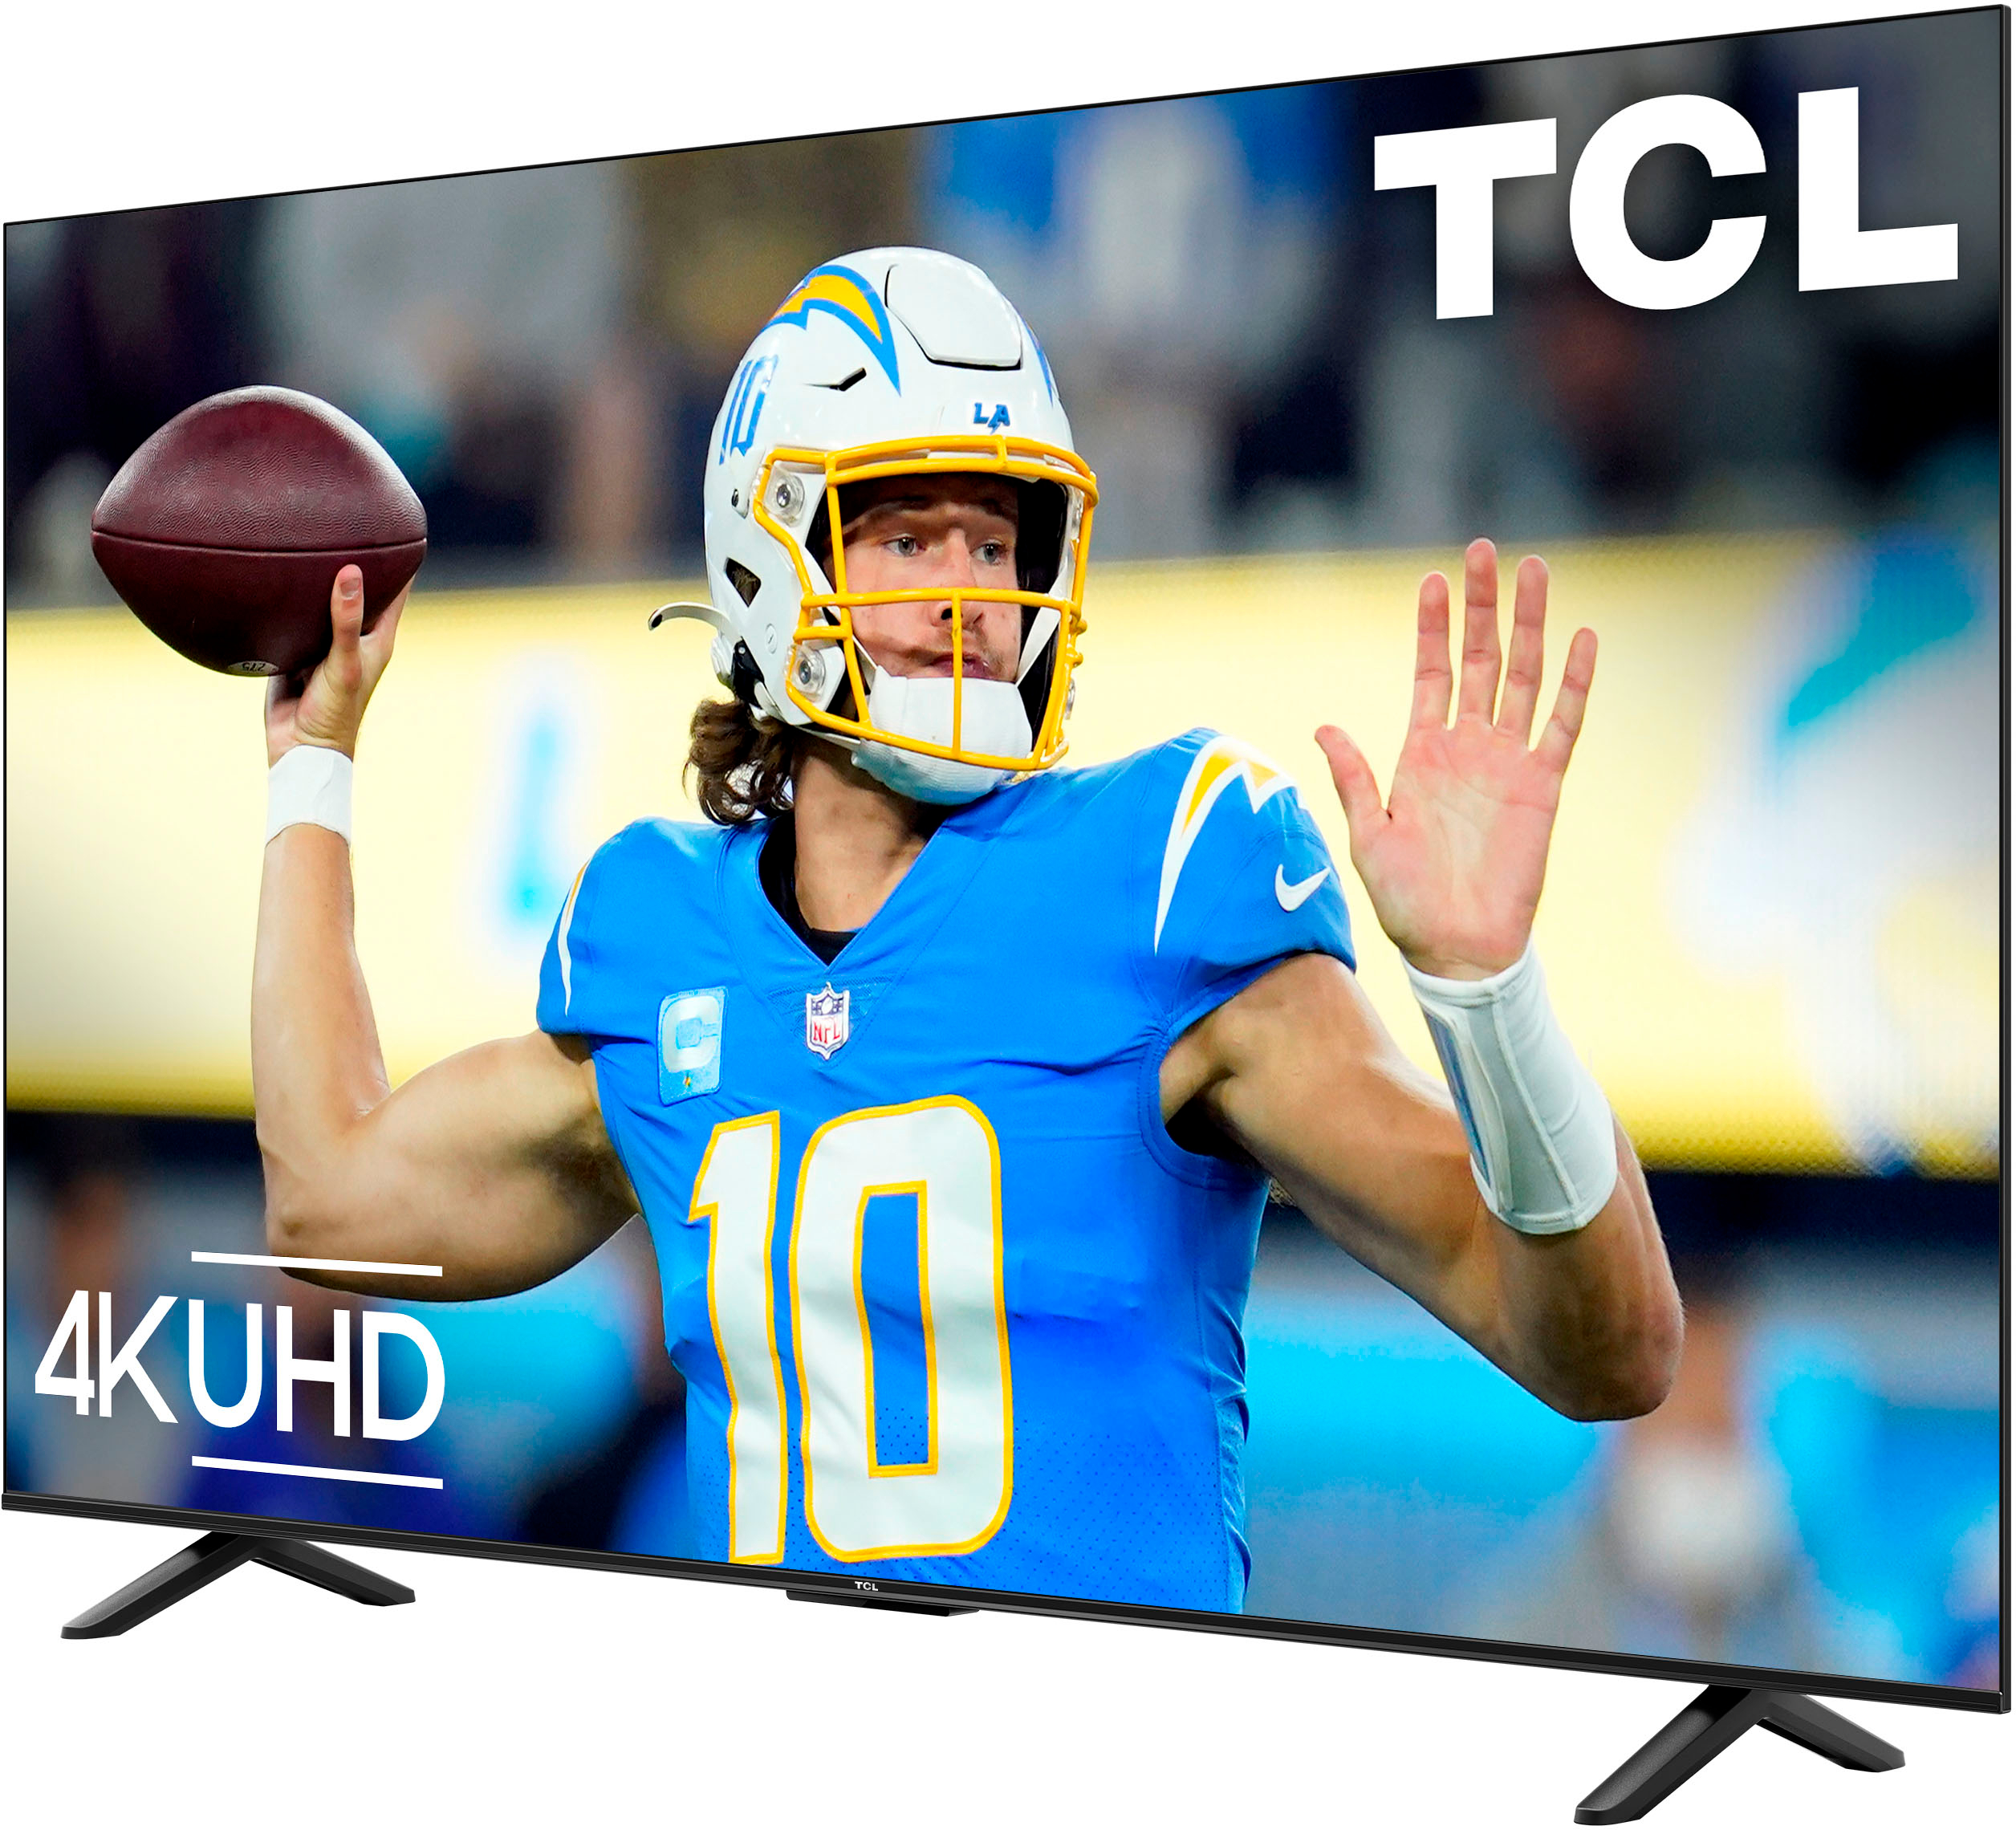 Best TCL TV deals: 4K TVs as low as $250